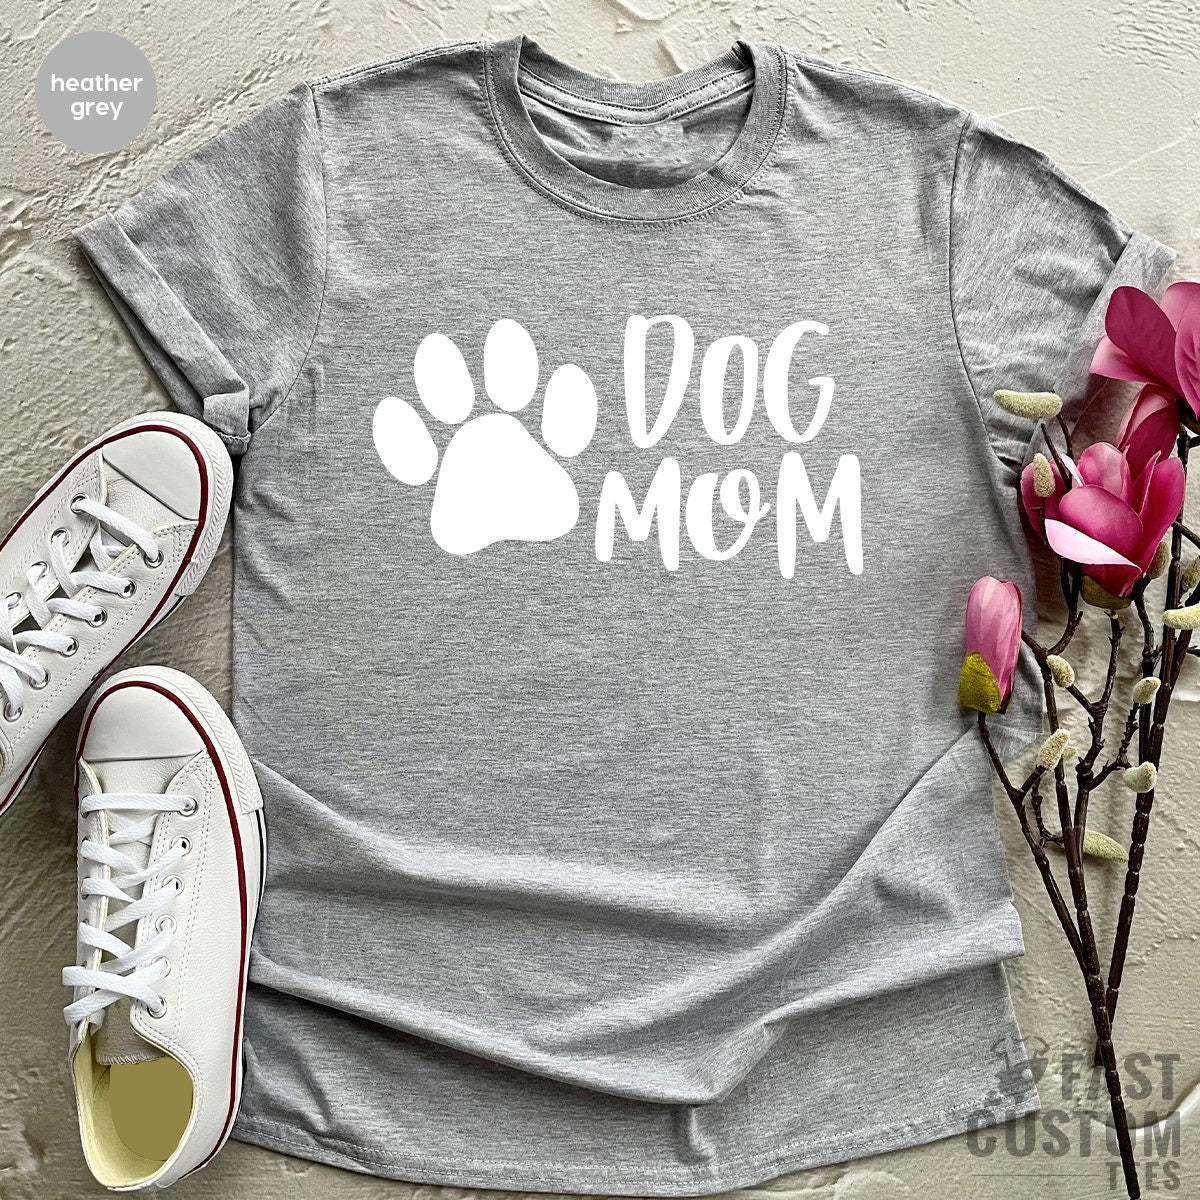 Dog Moms T-Shirt, Pet Lover T Shirt, Best Dog Mama Tshirt, Animal Adoption Shirt, Shirt For Women, Cute Paw Shirt, Dog Owner Gift, Wife Gift - Fastdeliverytees.com